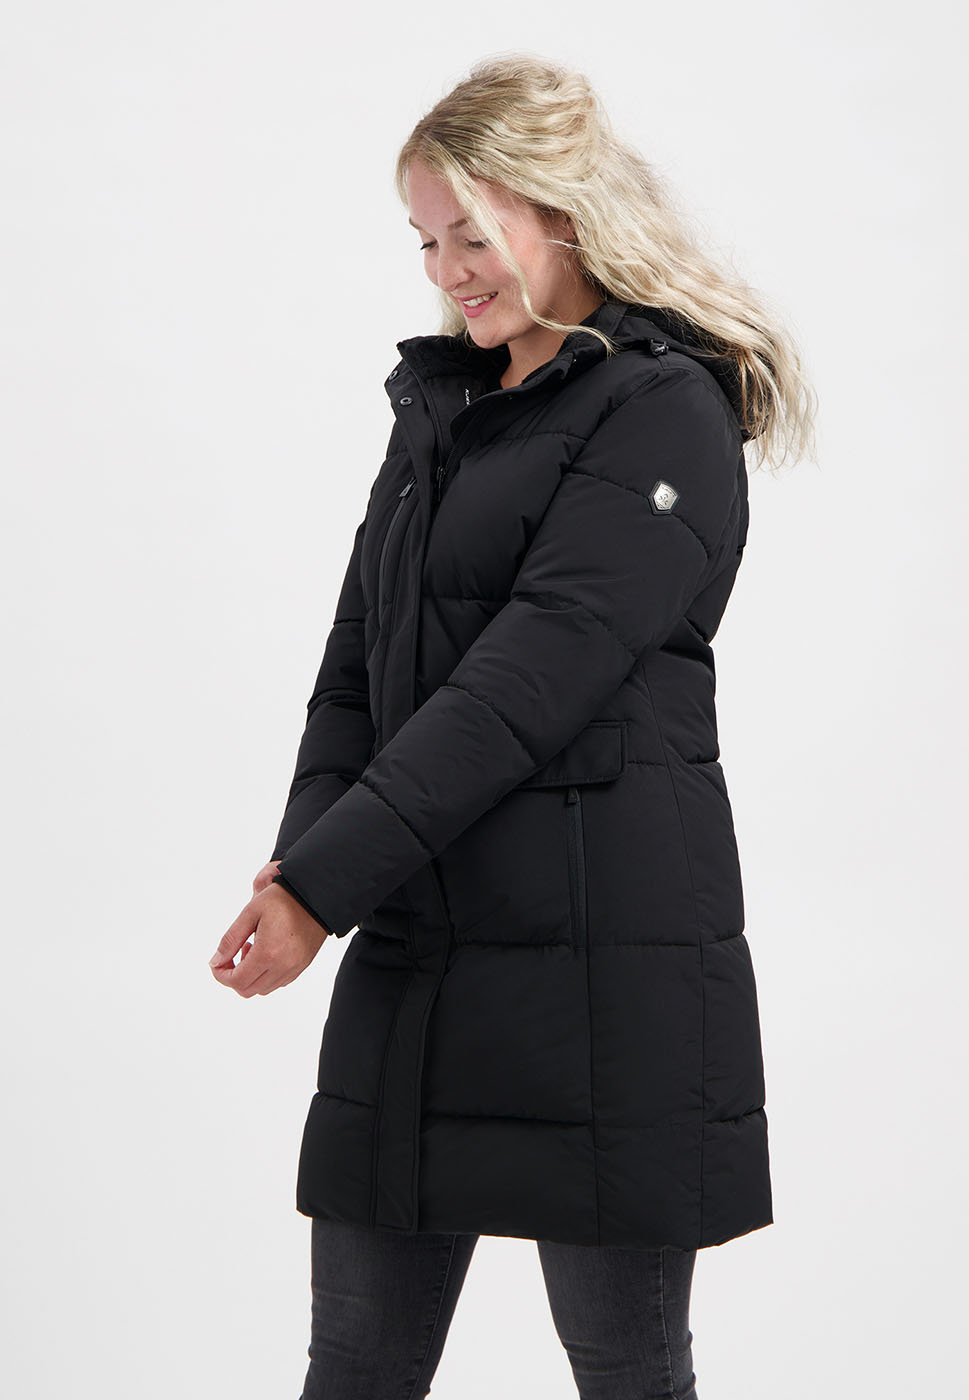 Kjelvik Scandinavian Clothing - Women Jackets Sofia Black